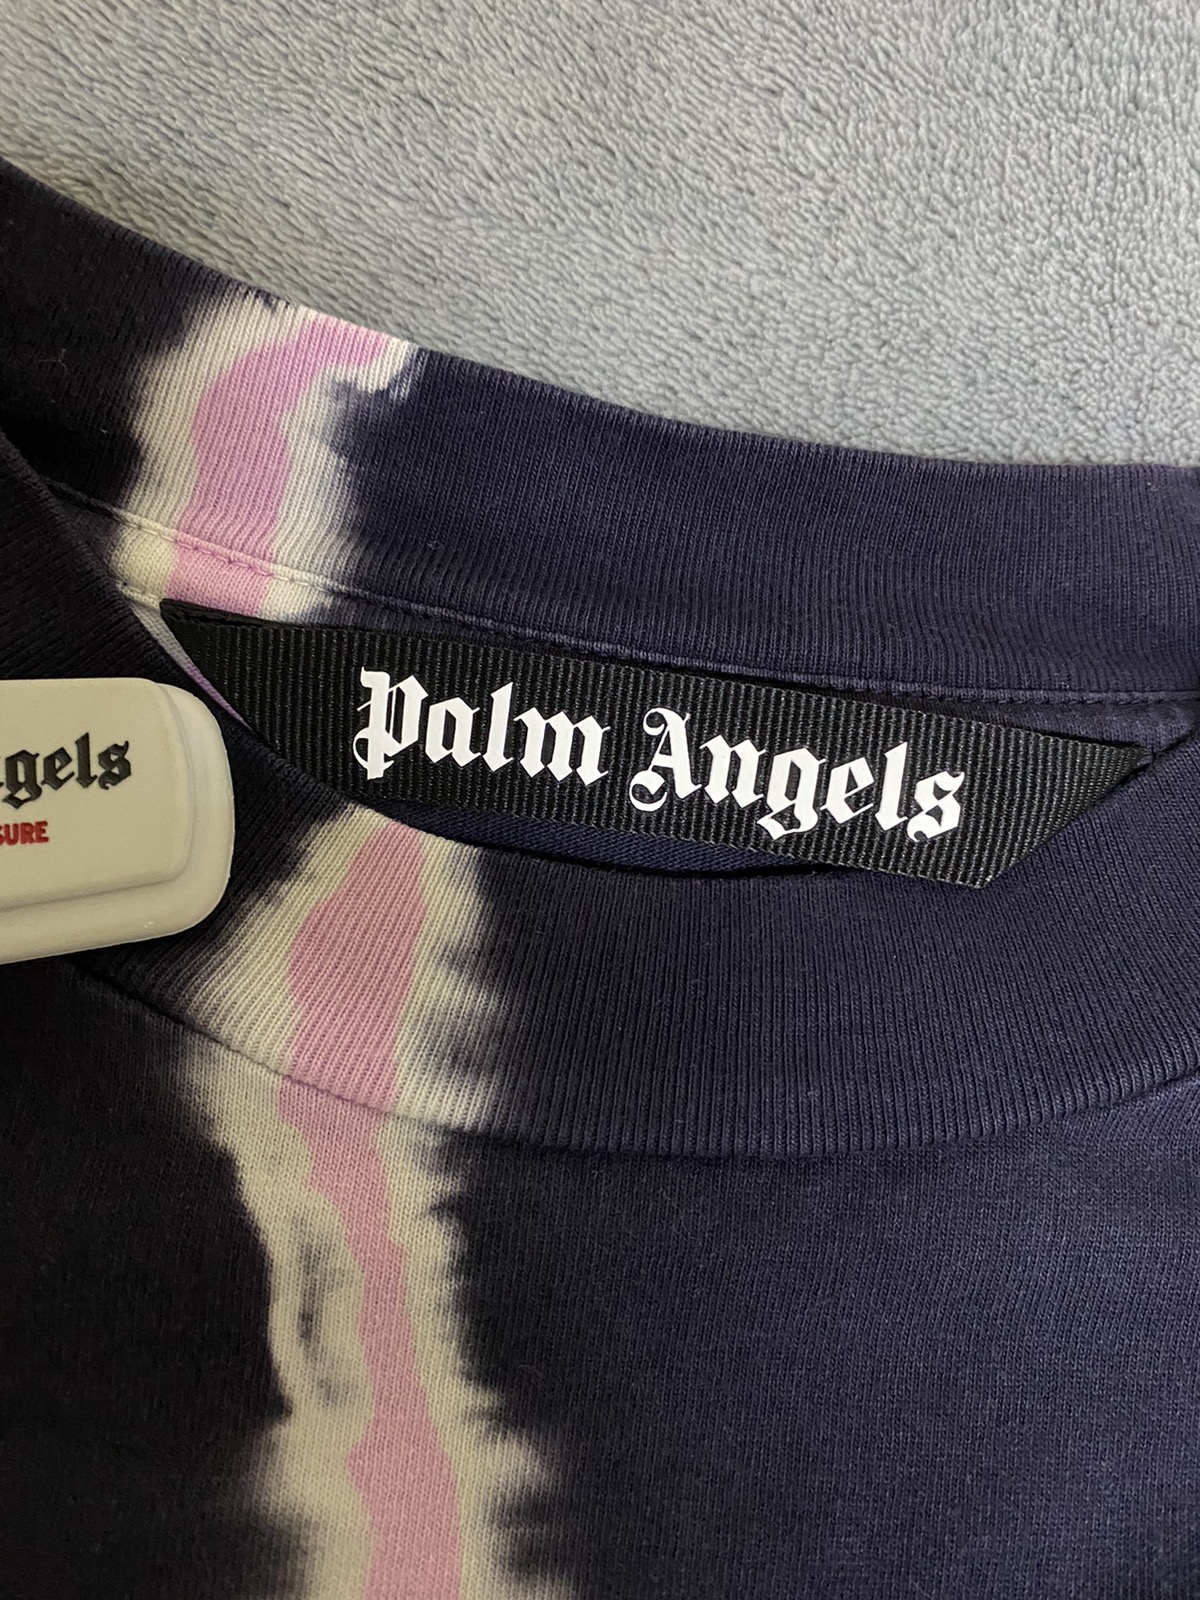 Palm Angels Butterfly Tie-Dye Tee T-shirt - 4